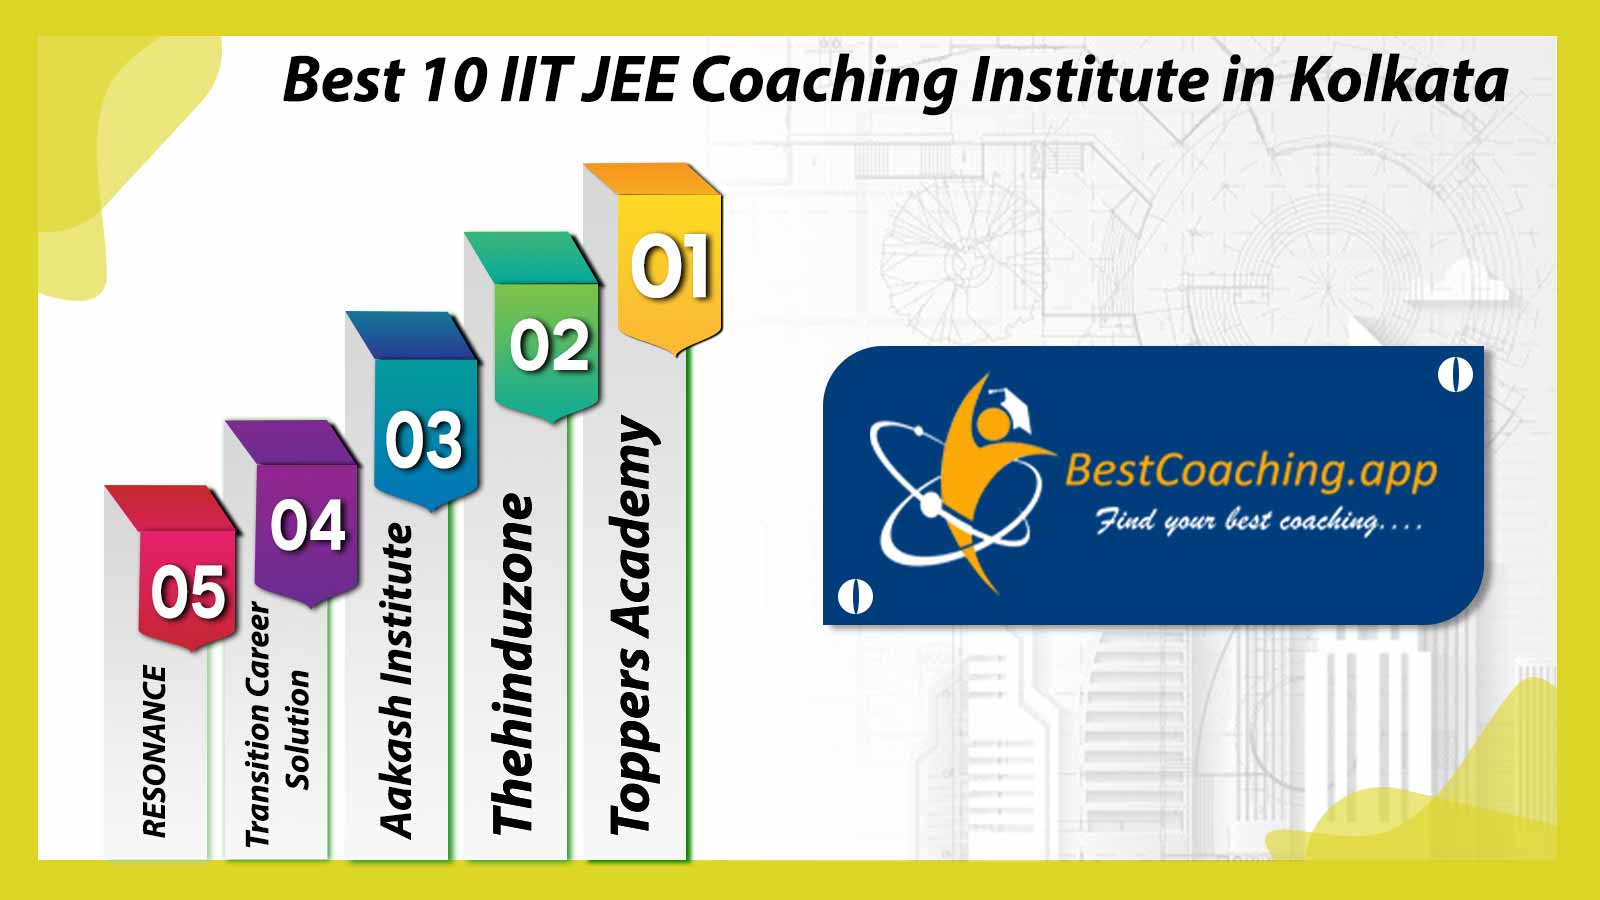 Best 10 IIT JEE Coaching Institute in Kolkata